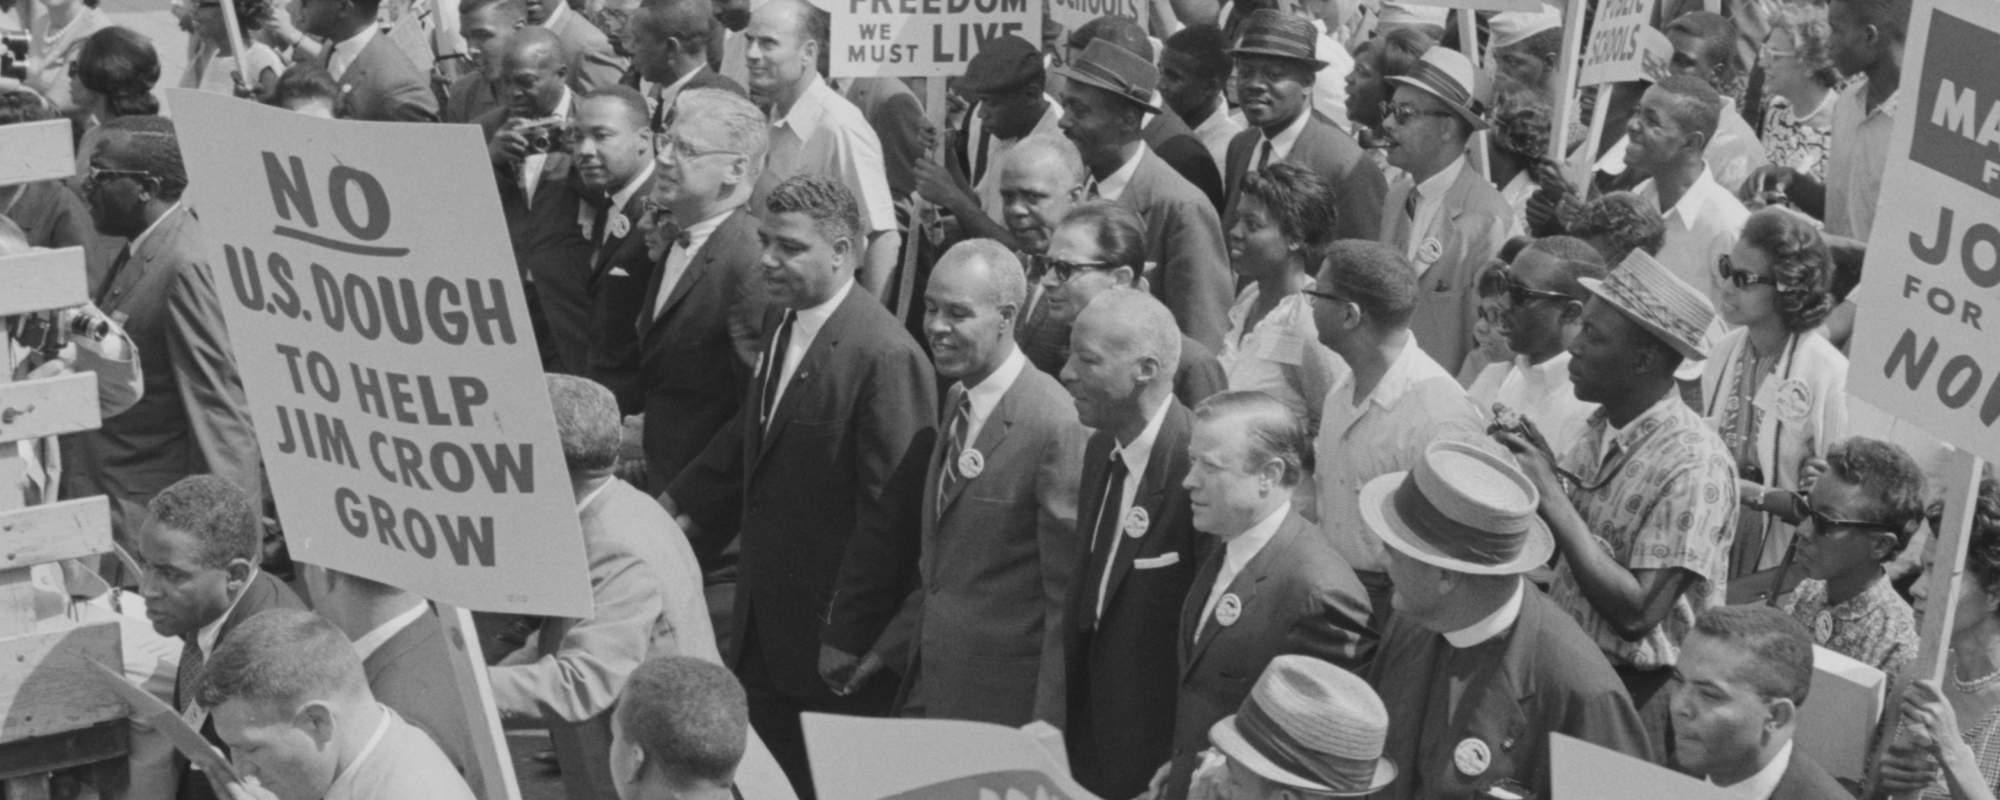 Civil Rights Demonstration - Washington, D.C., 1963